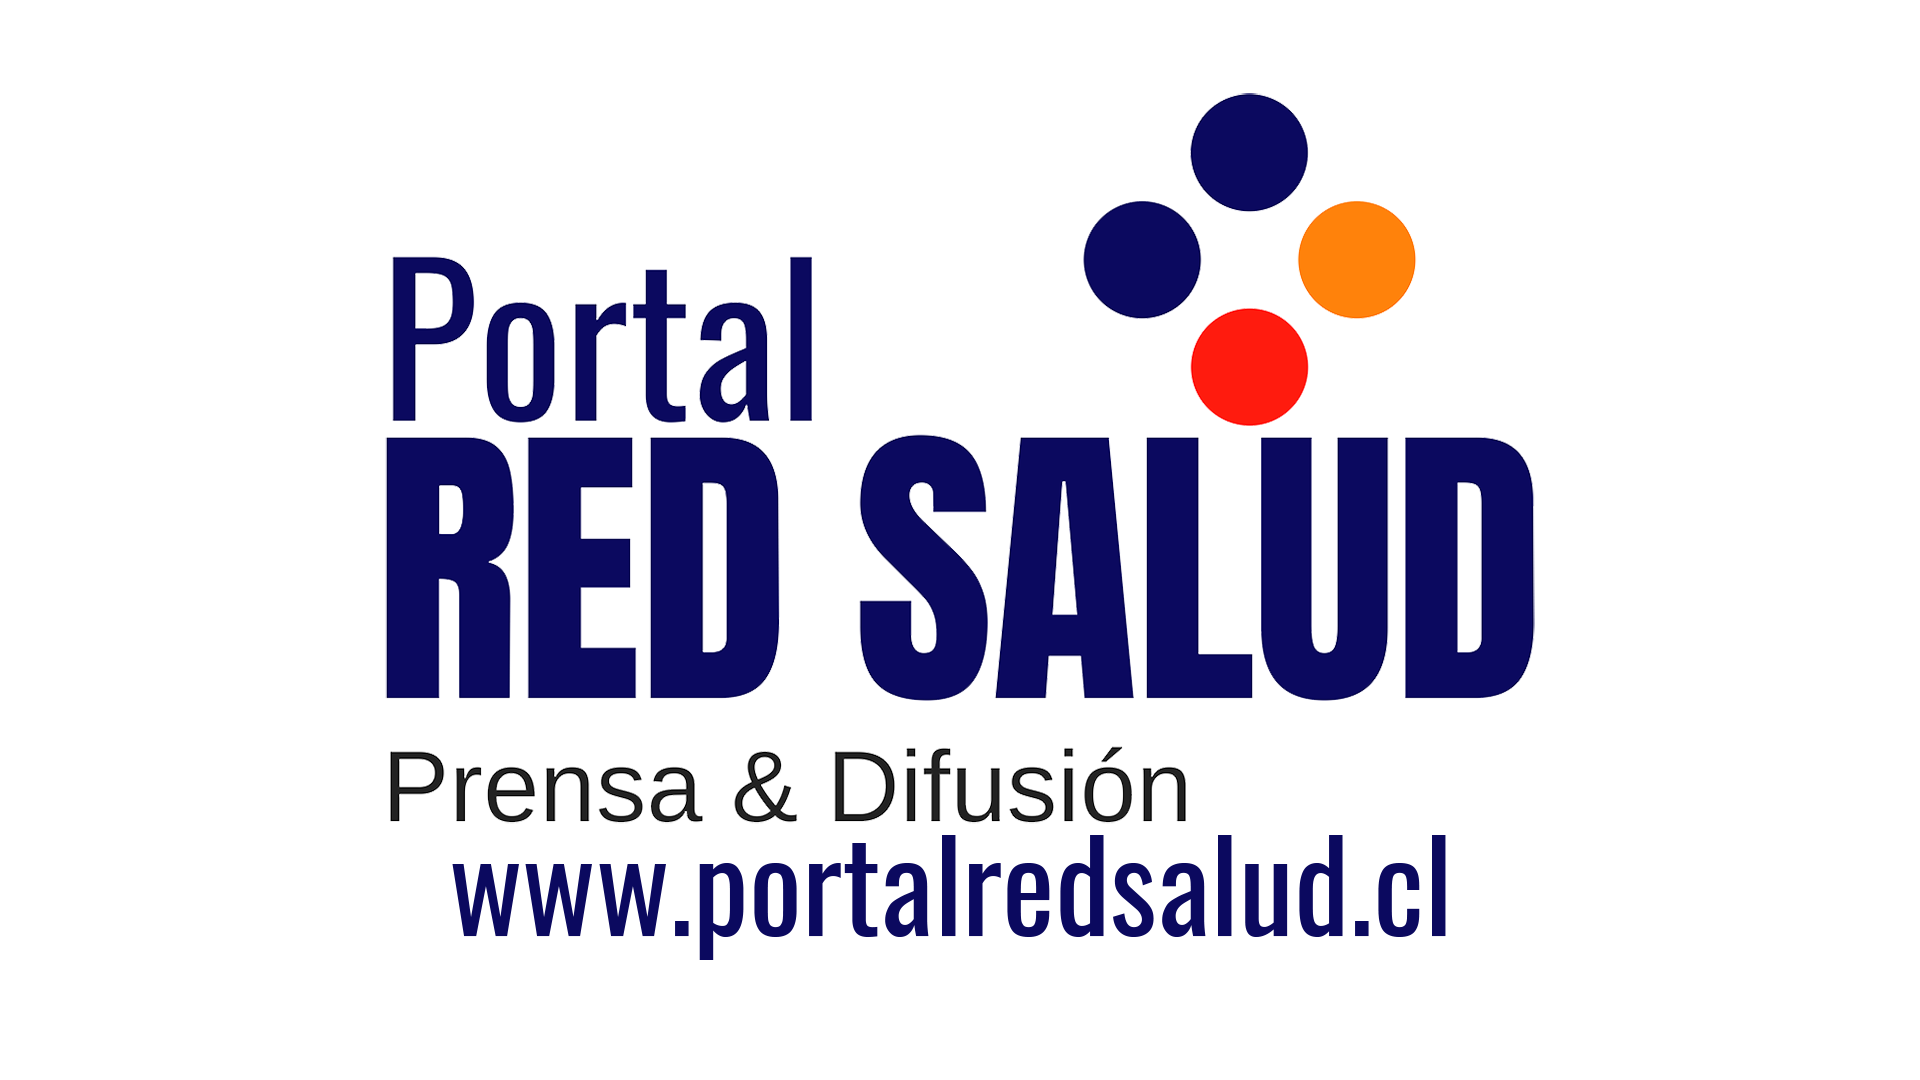 Portal Red Salud